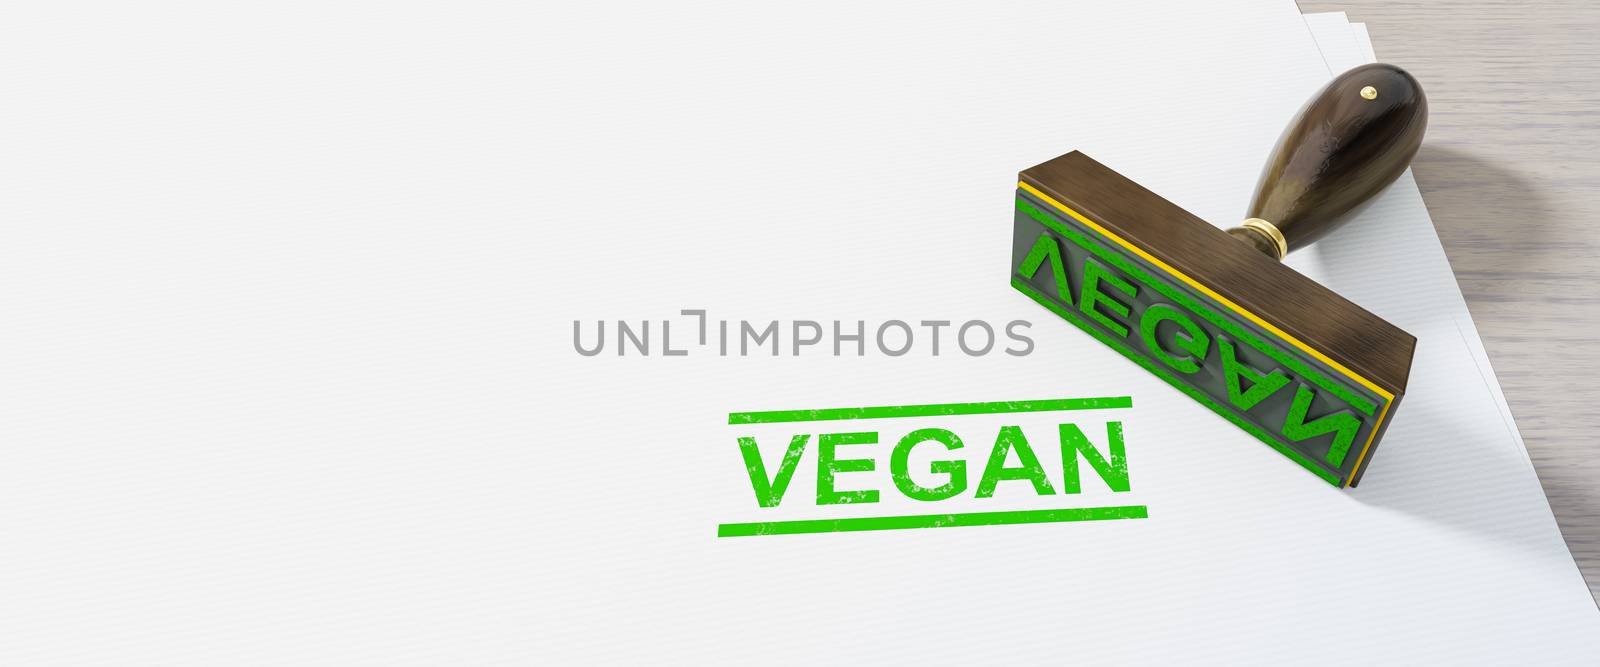 green stamp vegan on white paper background 3D illustration